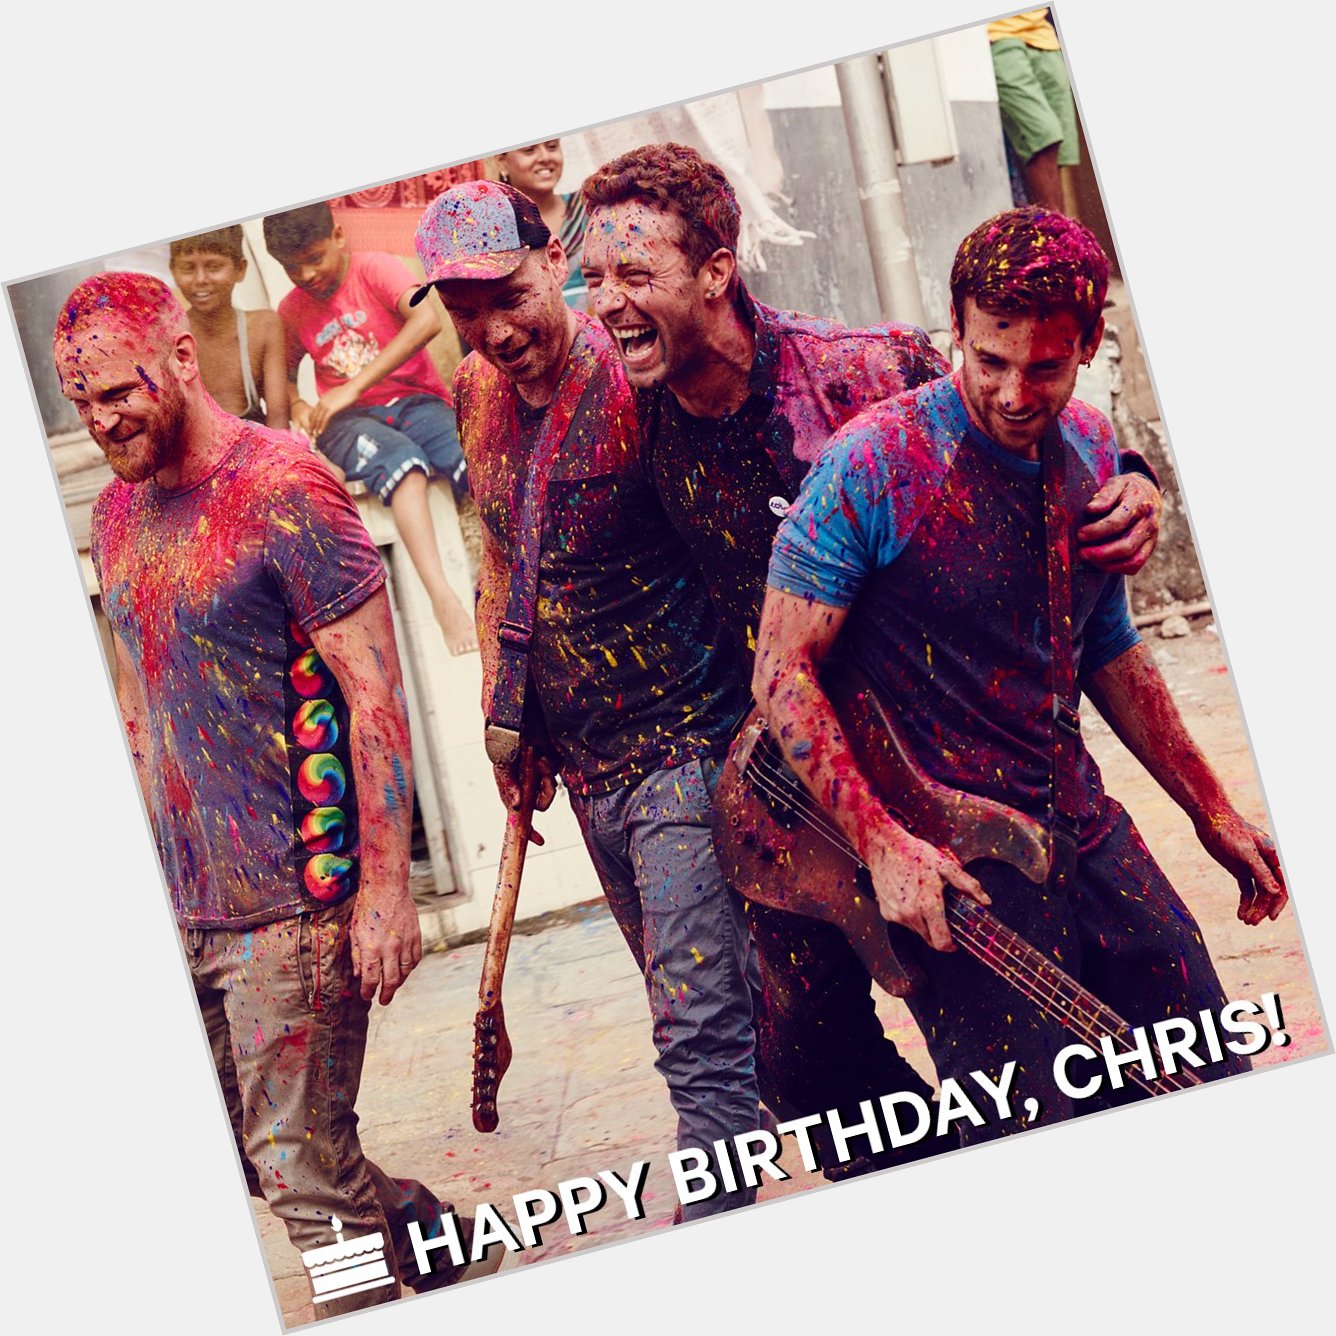 Happy birthday to frontman Chris Martin! 